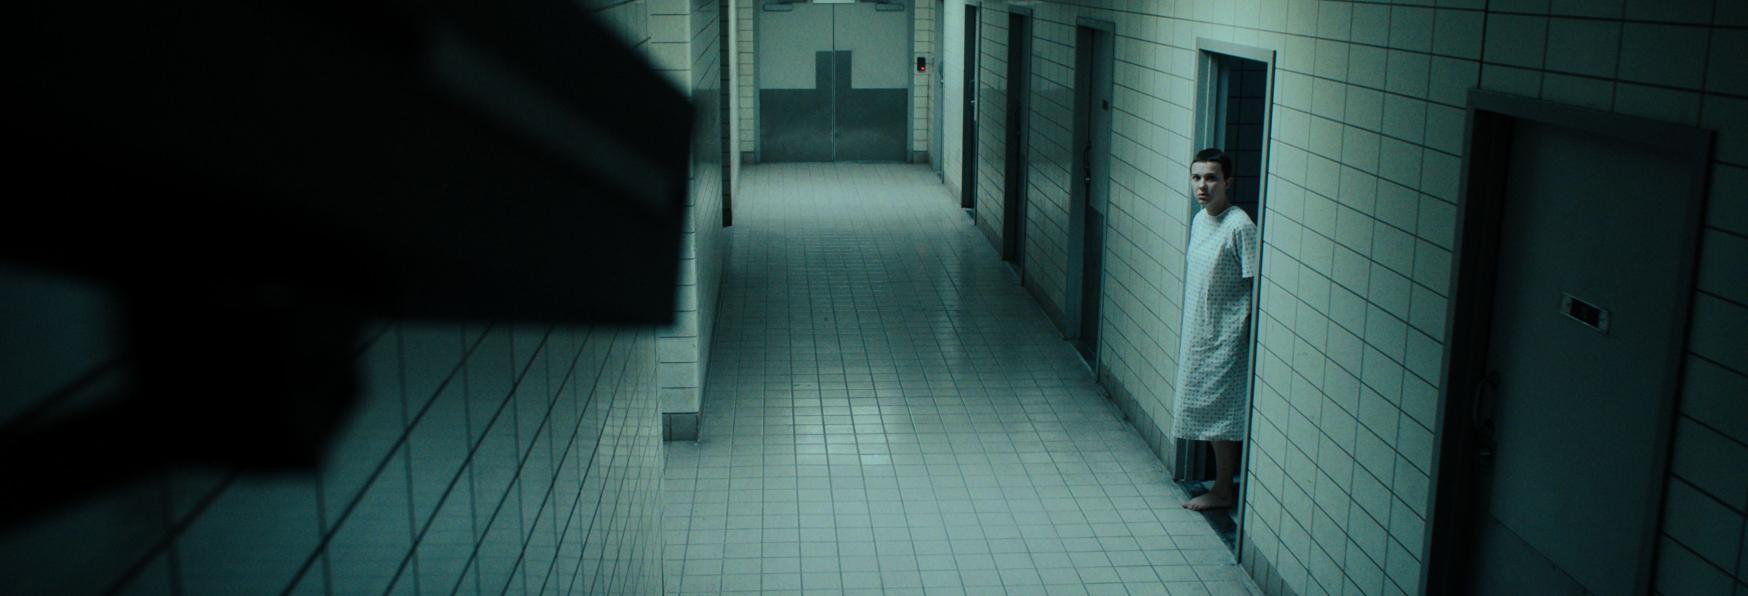 Stranger Things 4, Volume 2: il Breve Teaser Trailer presente dopo i Titoli di Coda